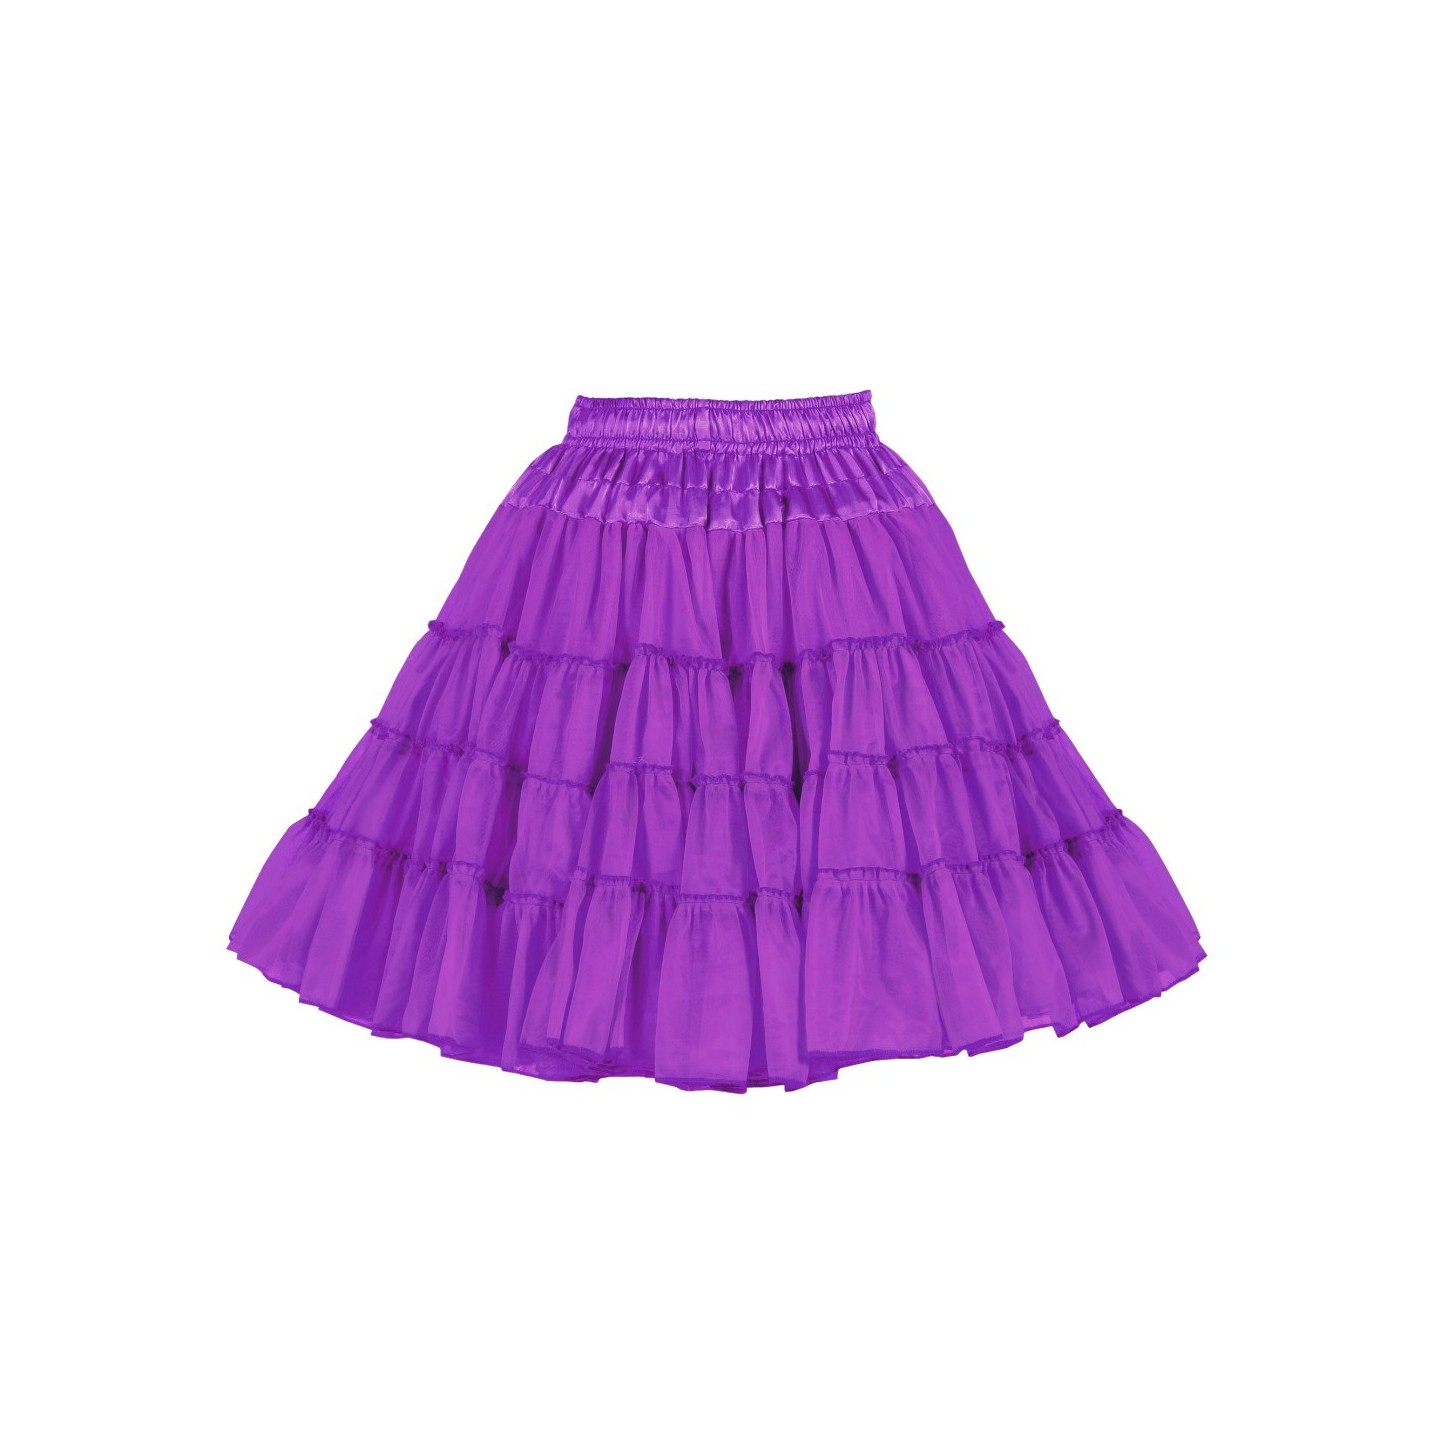 paarse lila petticoat onderrok dames rok